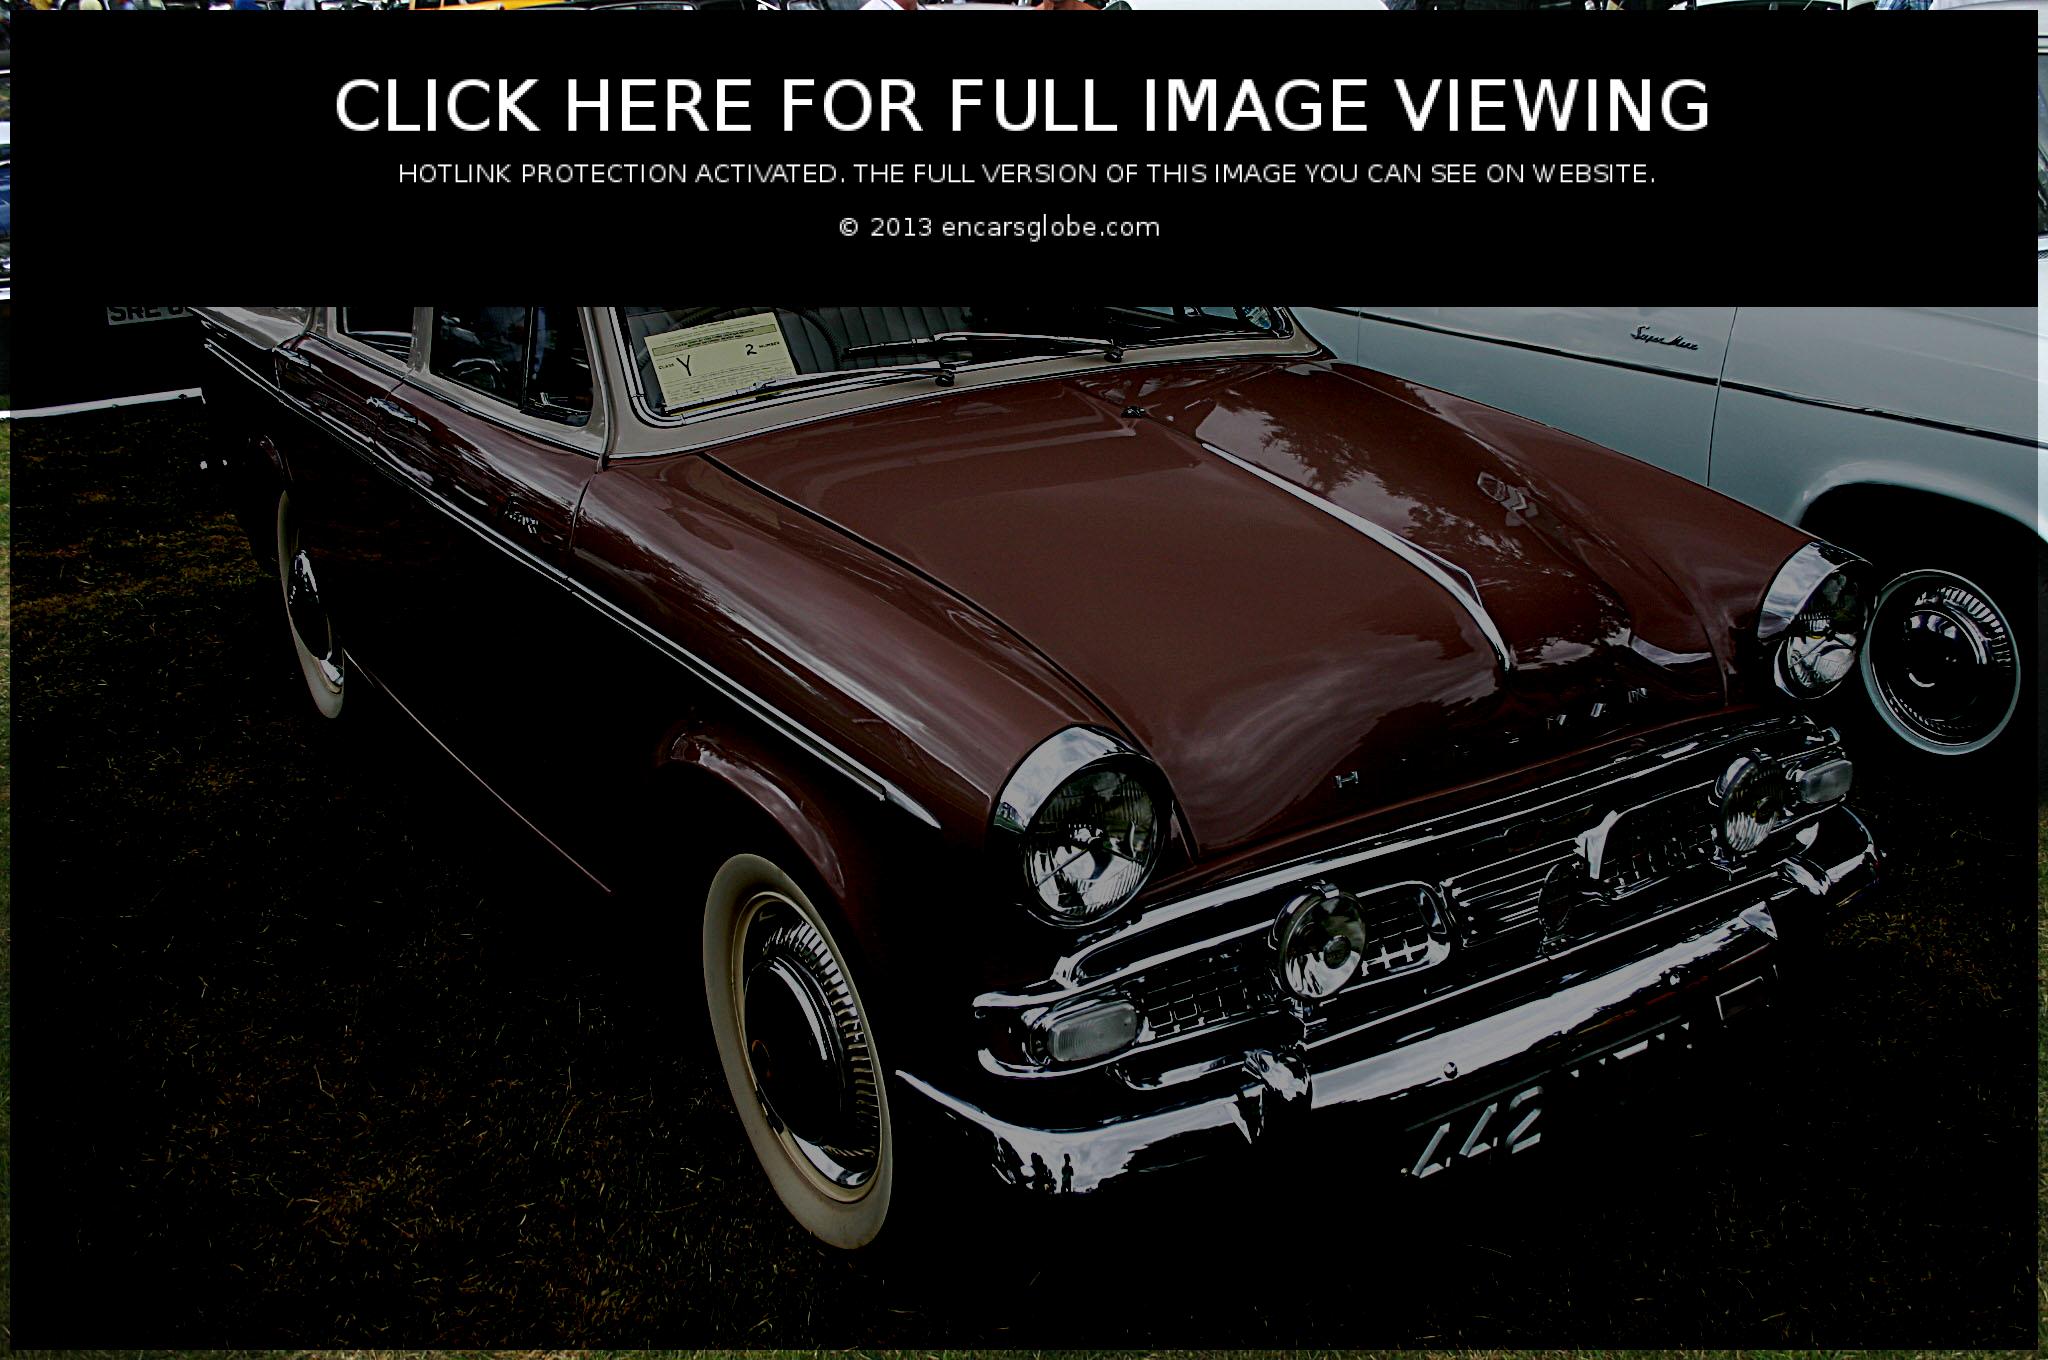 Hillman Super Minx sedan Photo Gallery: Photo #03 out of 9, Image ...